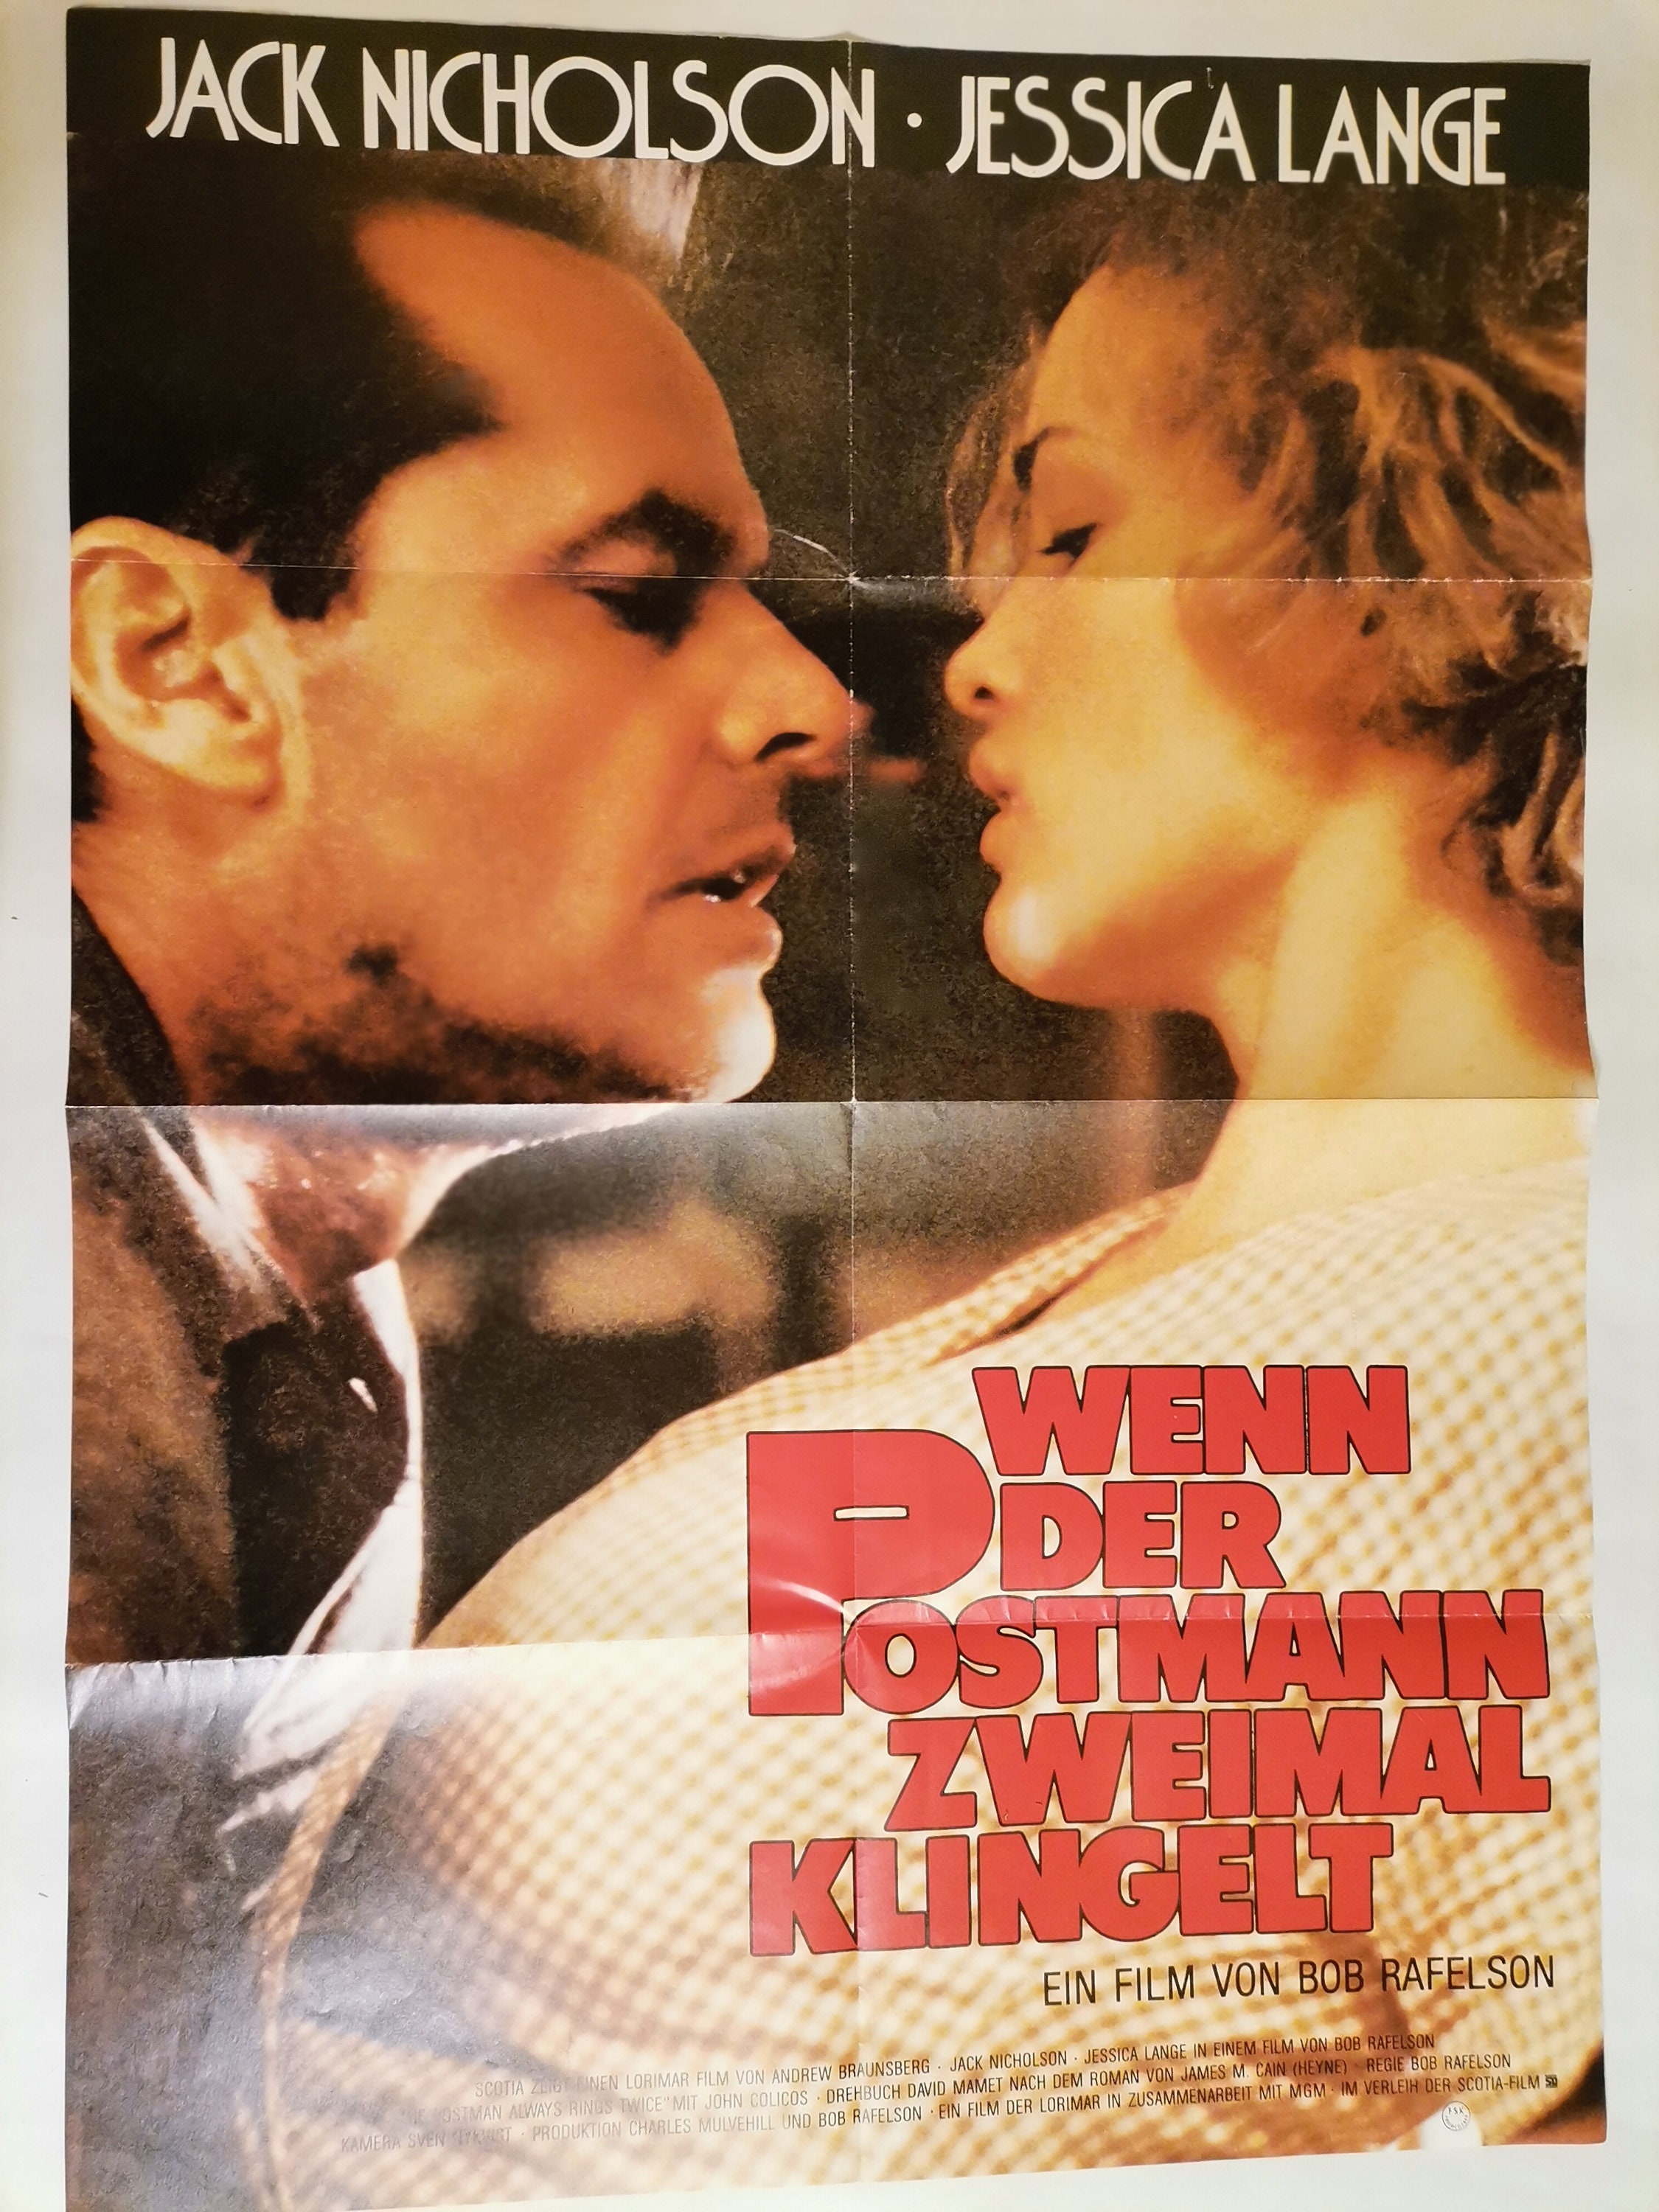 The Postman Always Rings Twice -  Jack Nicholson, Jessica Lange, 1981 - Original German 1-Sheet Poster